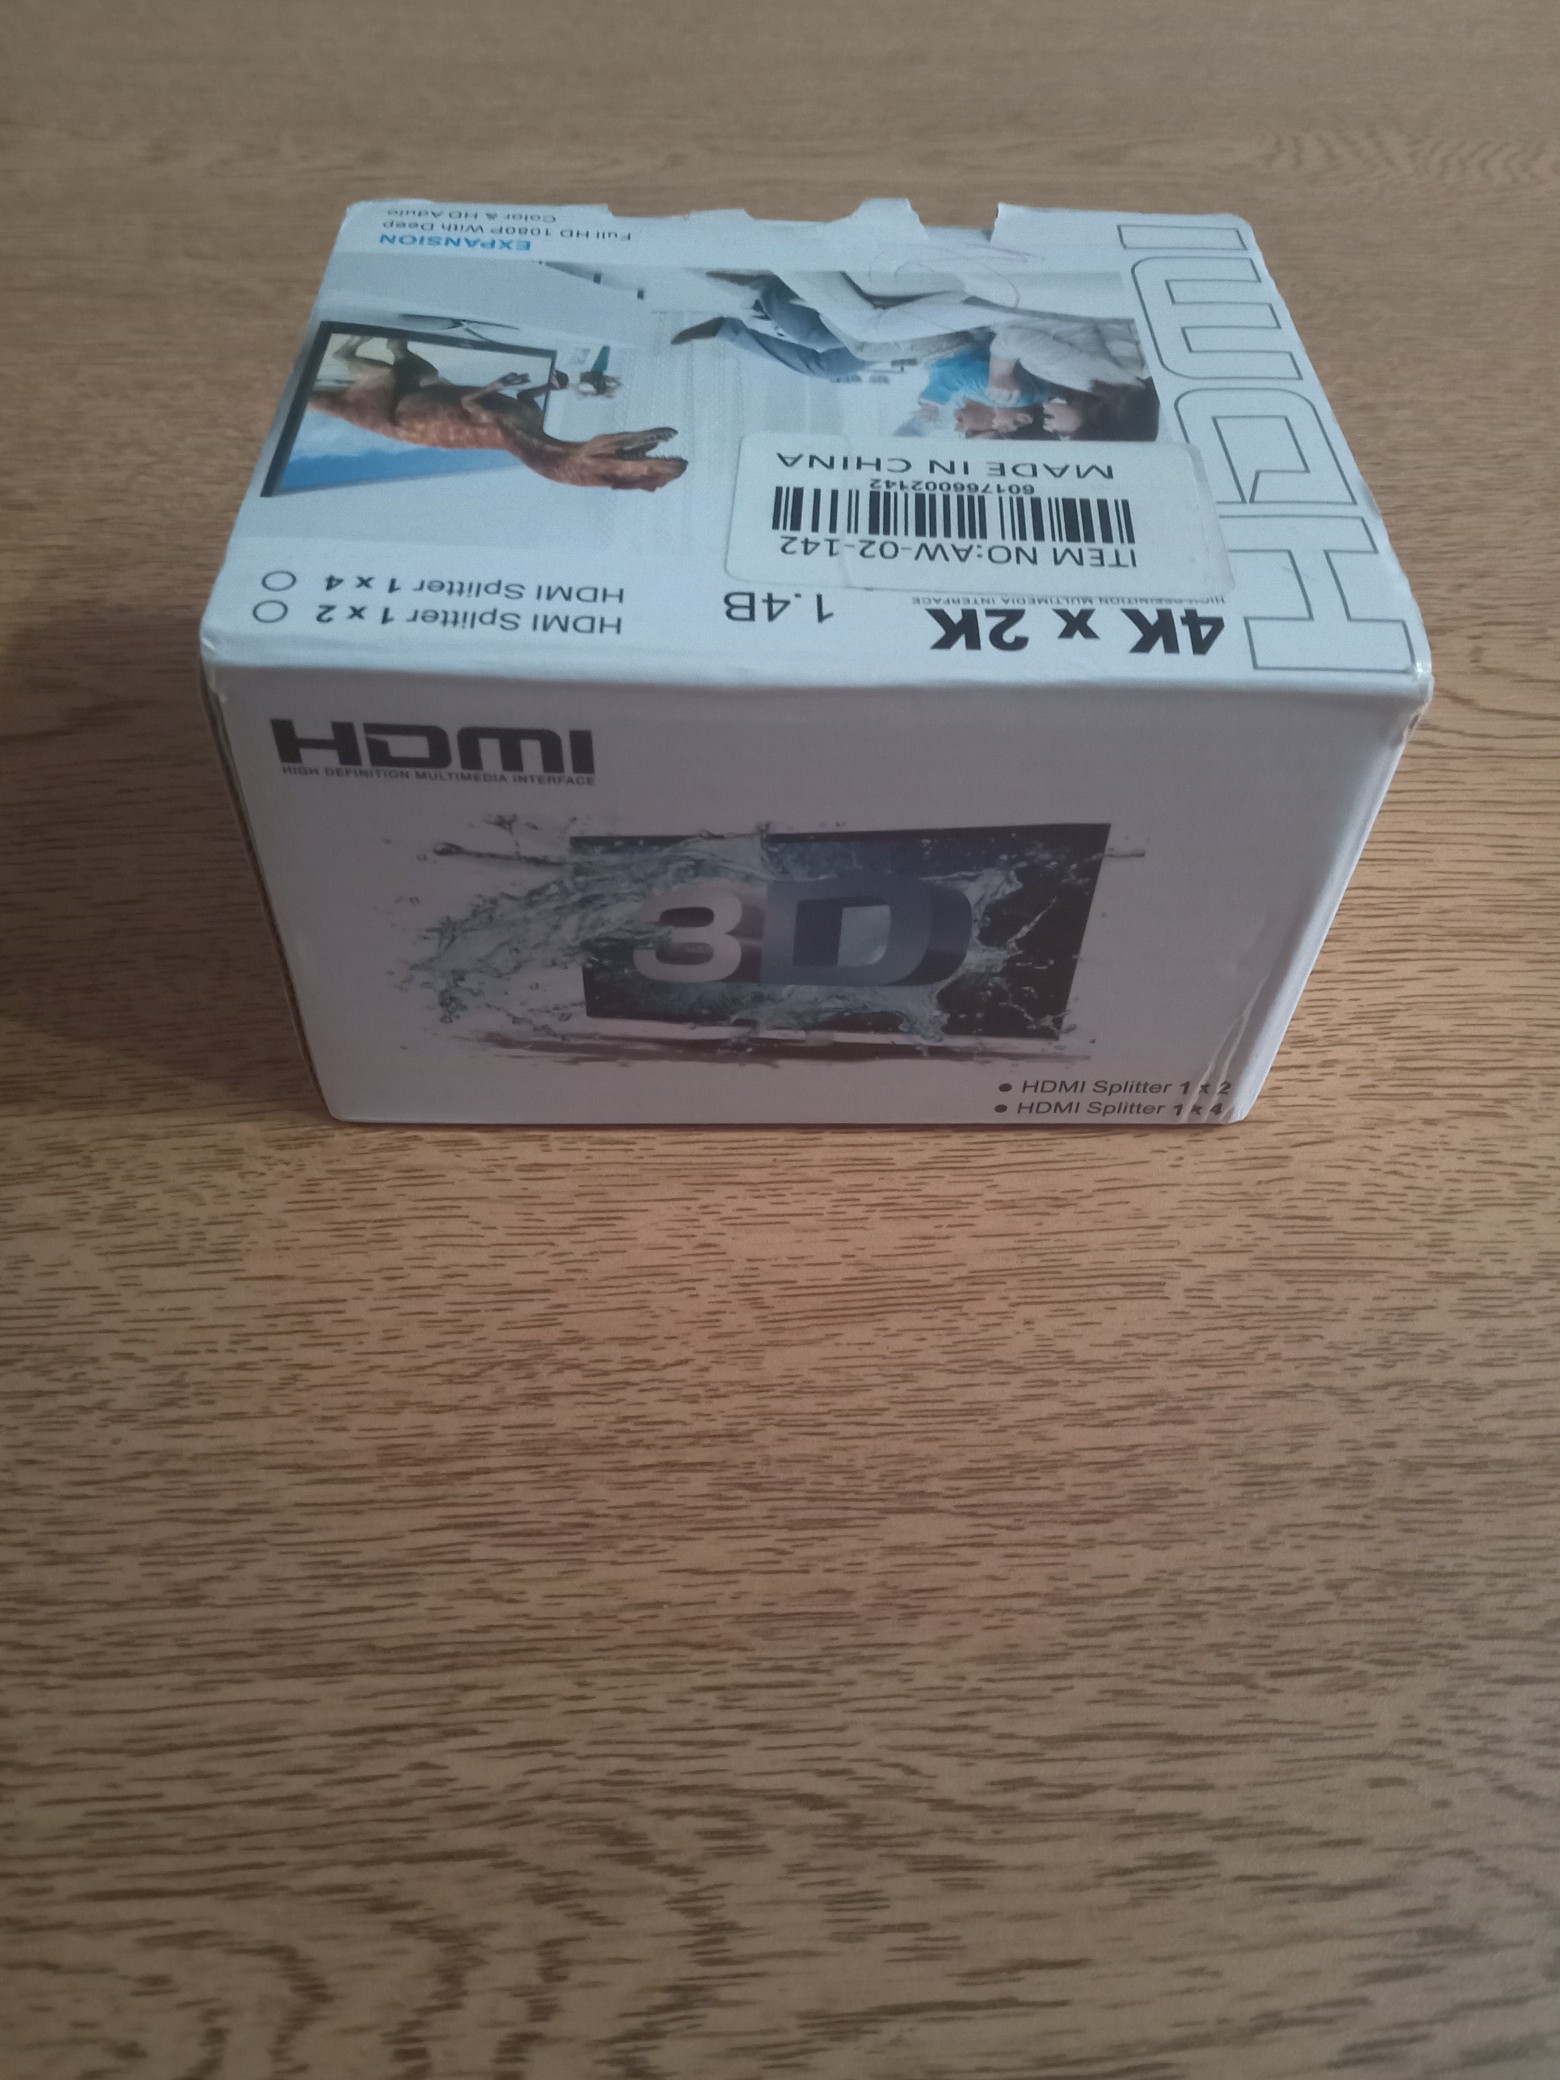 tv - Splitter HDMI Interfaz multimedia de alta definición HD 4k

1X4